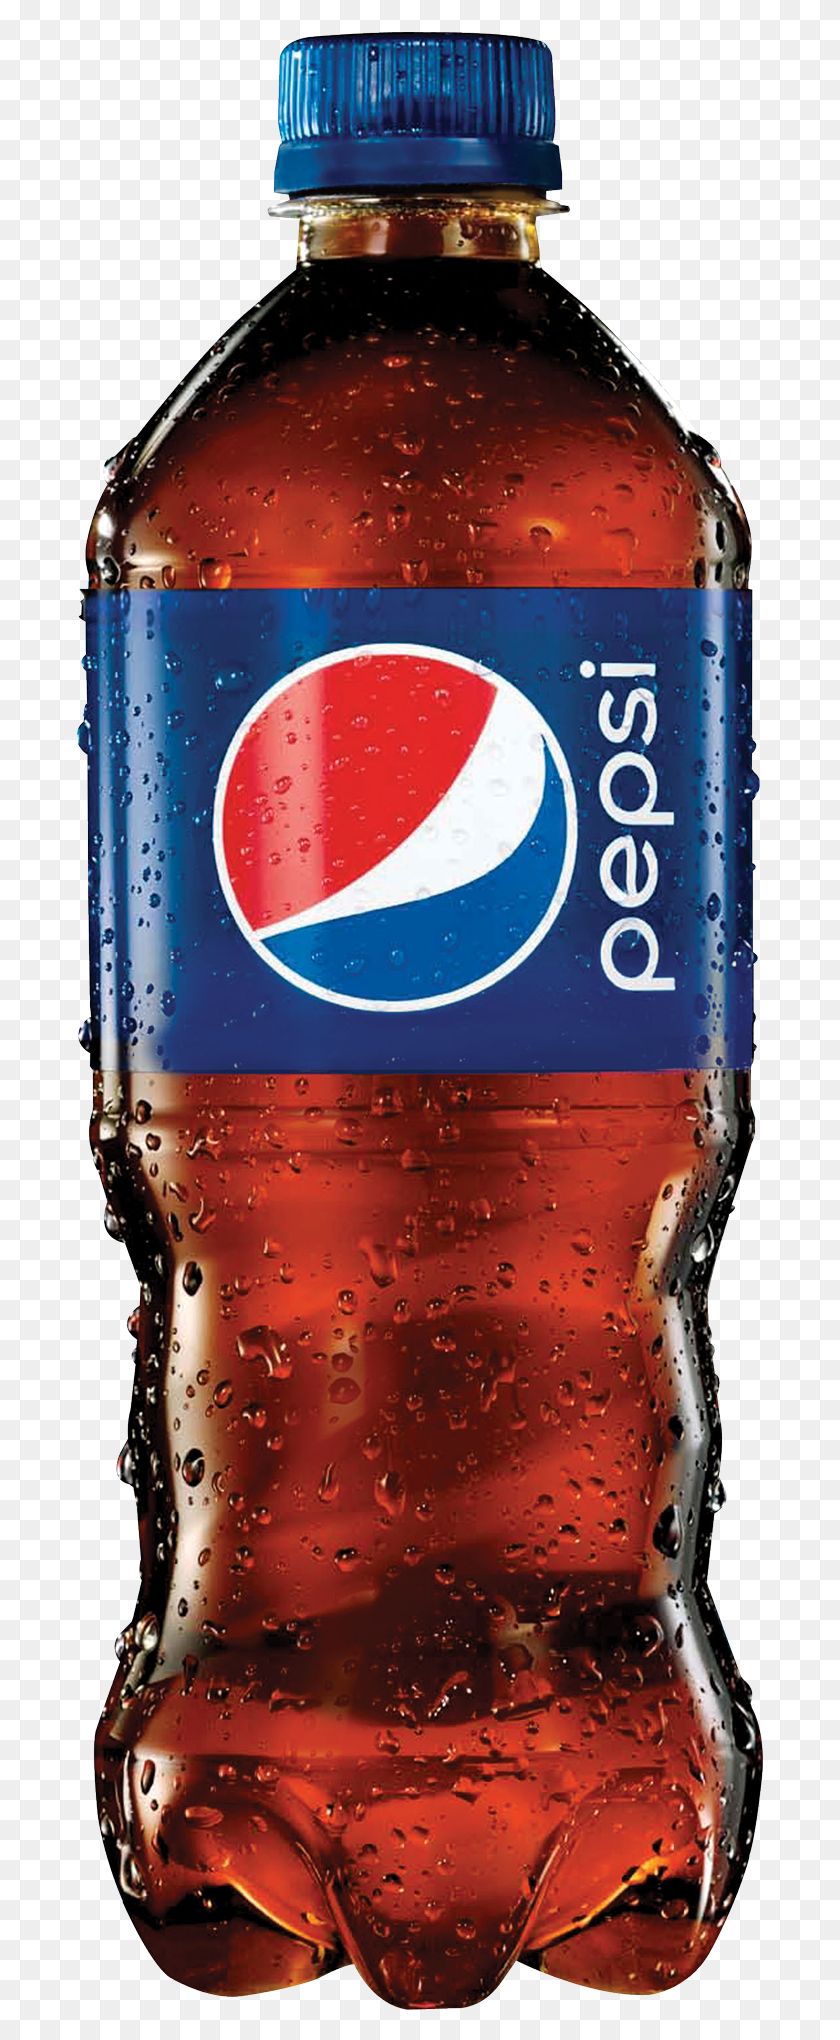 689x1980 Pepsi Image Pepsi Bottle 2017, Soda, Beverage, Drink HD PNG Download